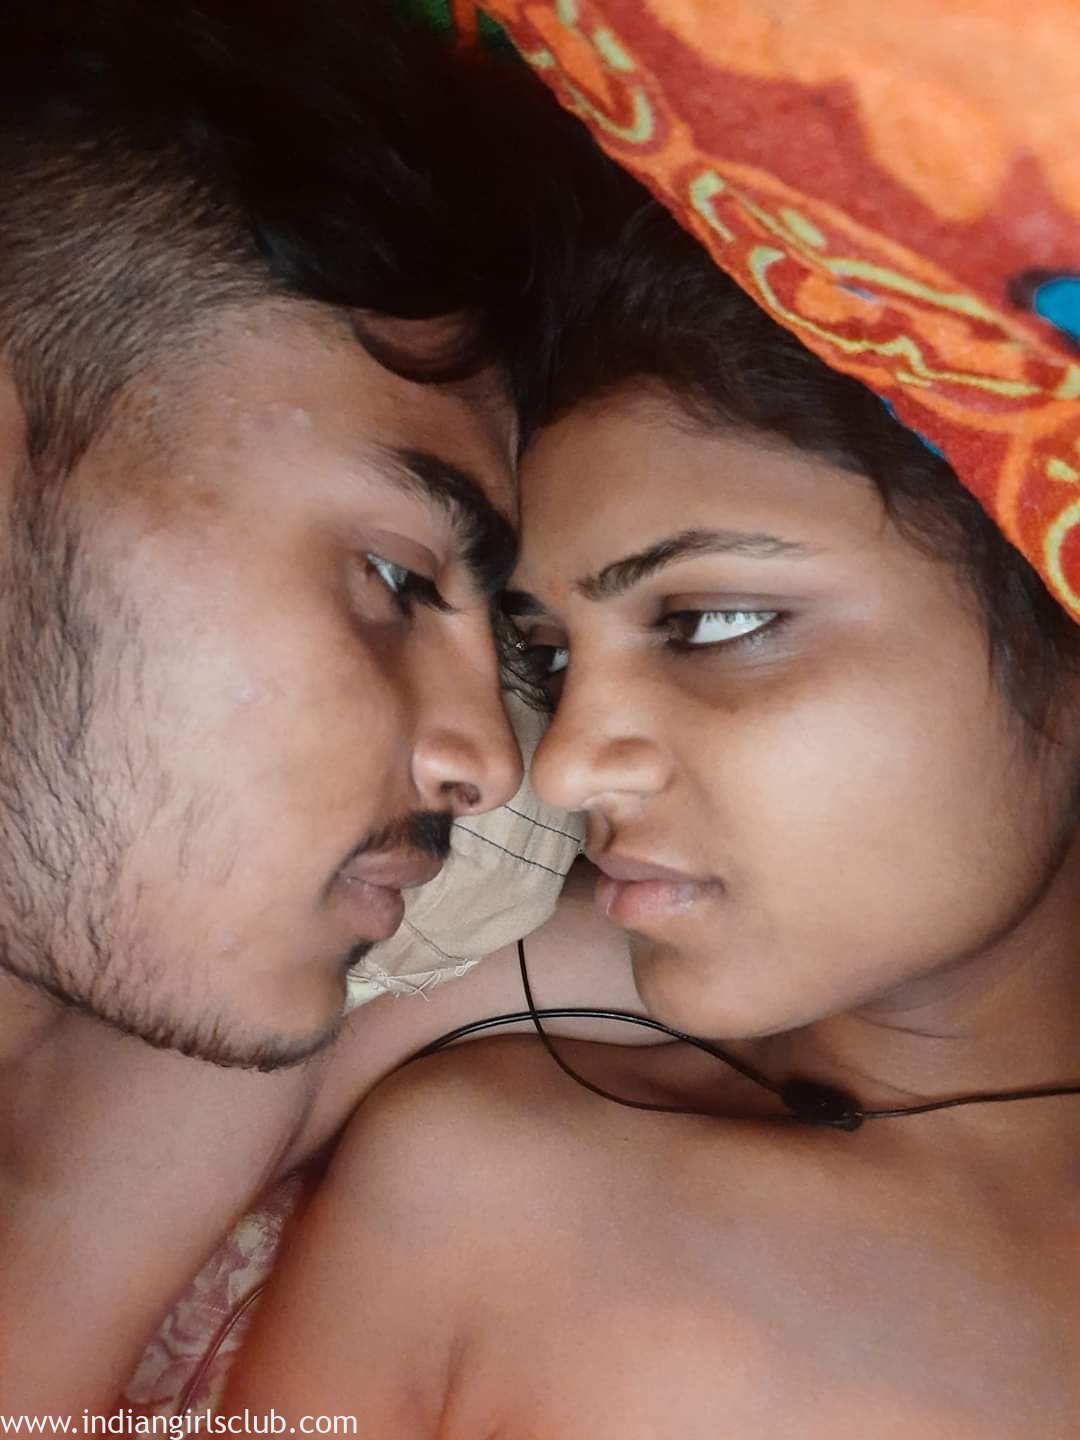 Tamil bed sex